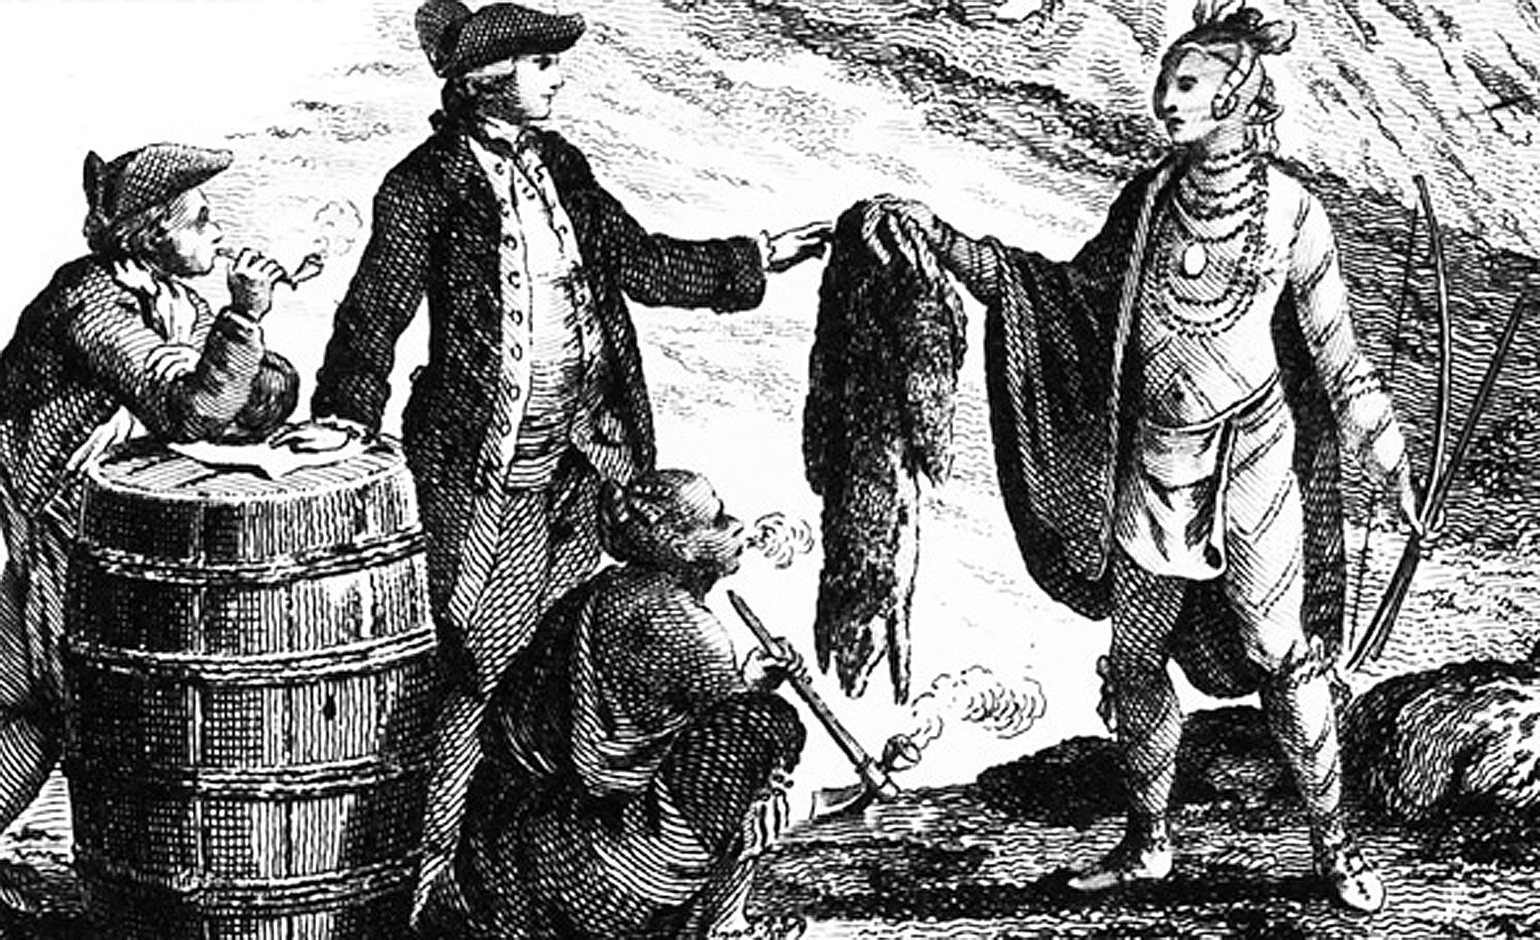 The fur trade in 1777